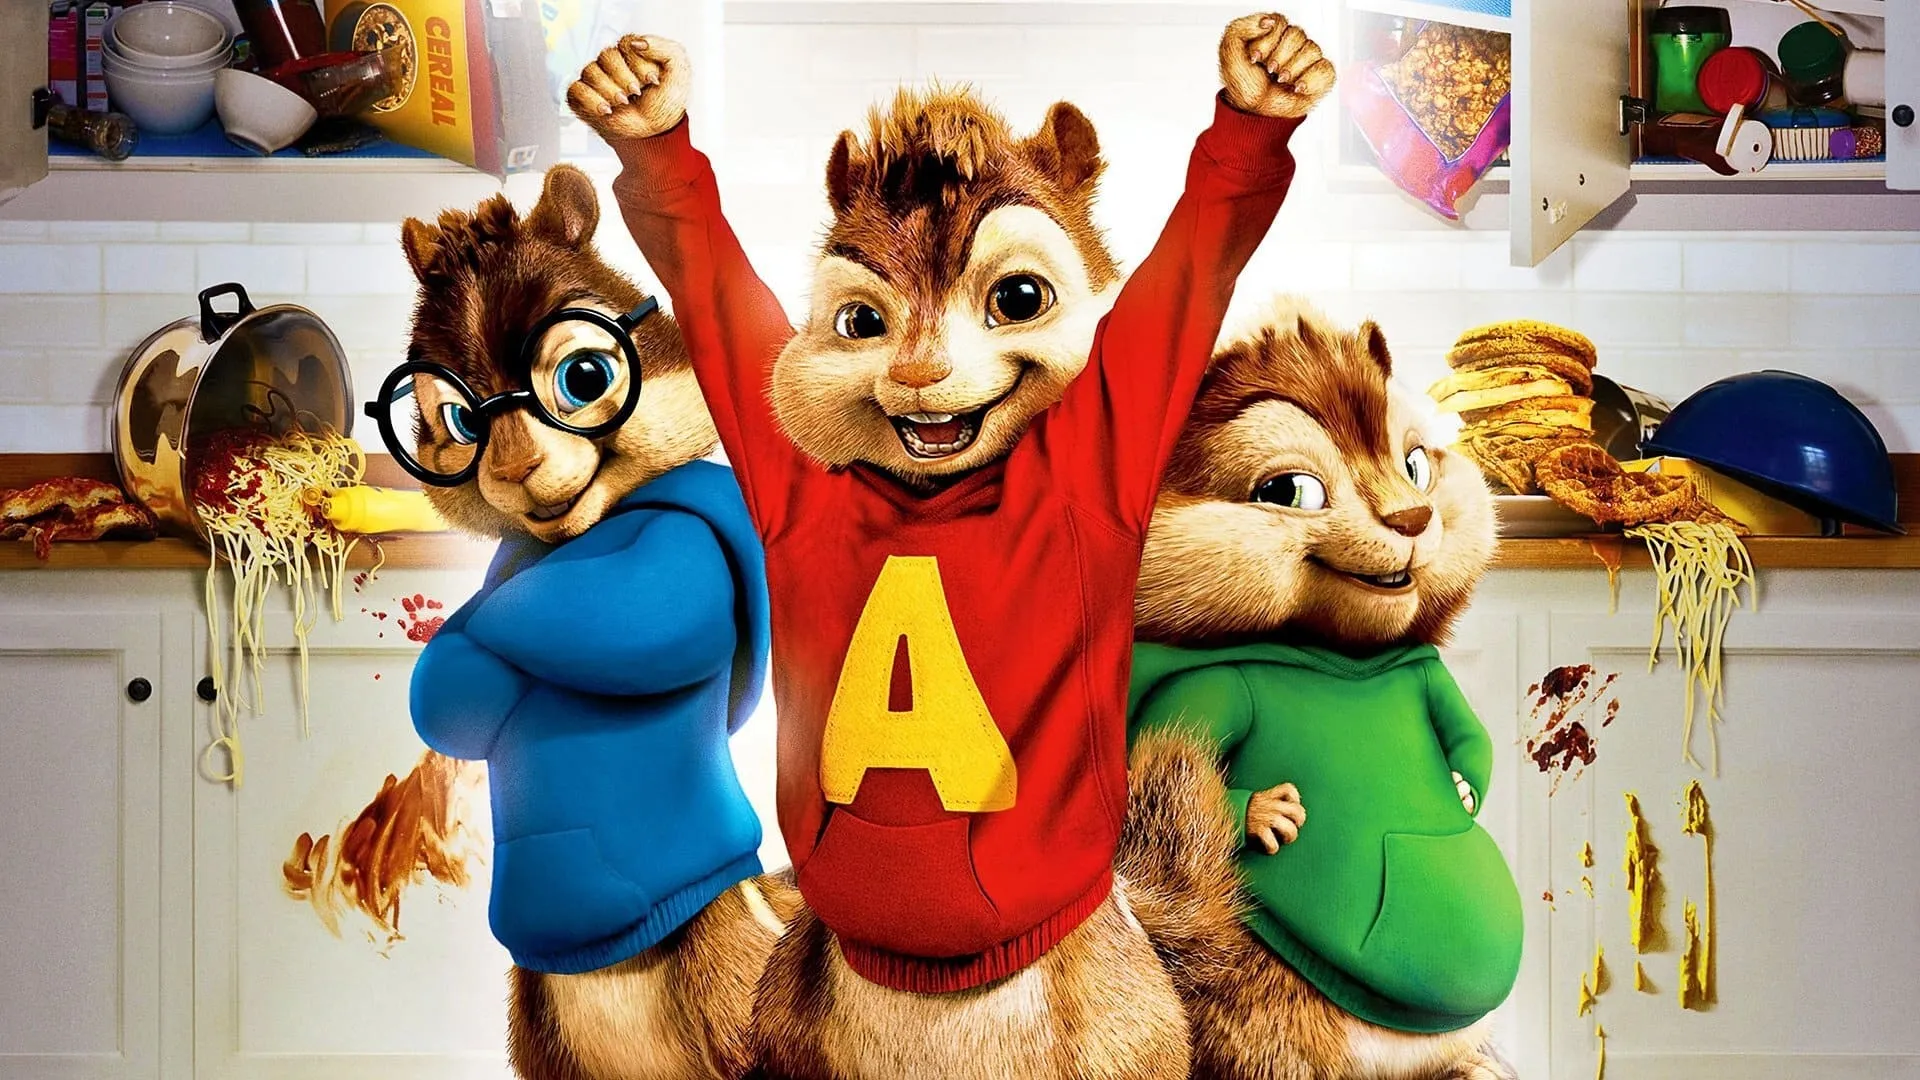 Alvin and the Chipmunks (NL)